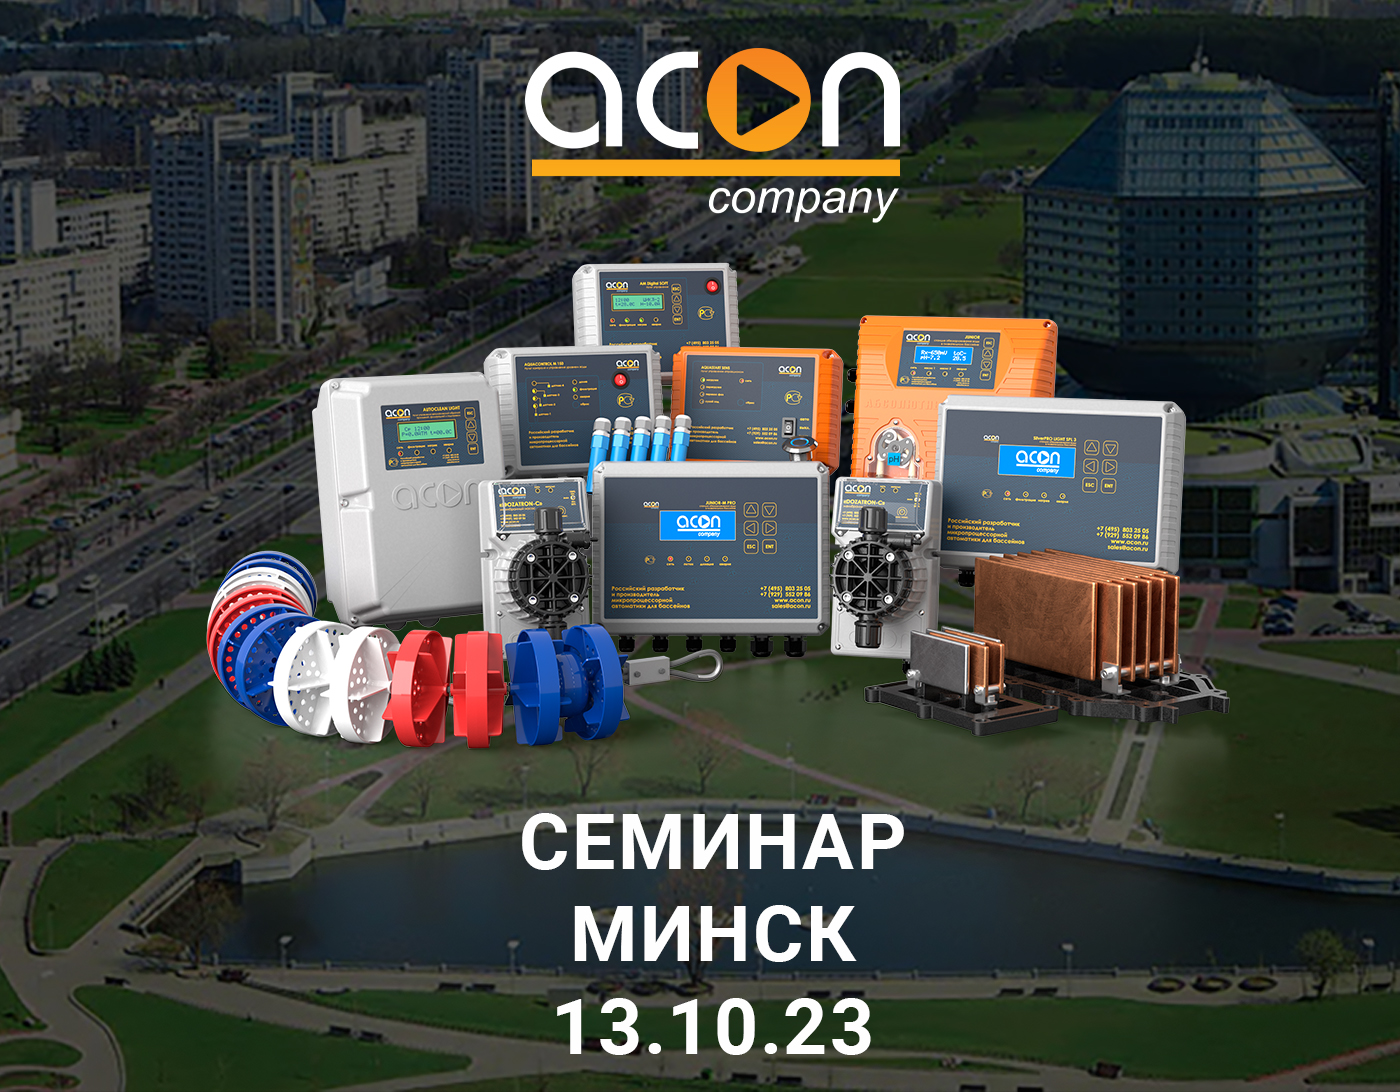 ACON seminar in Minsk